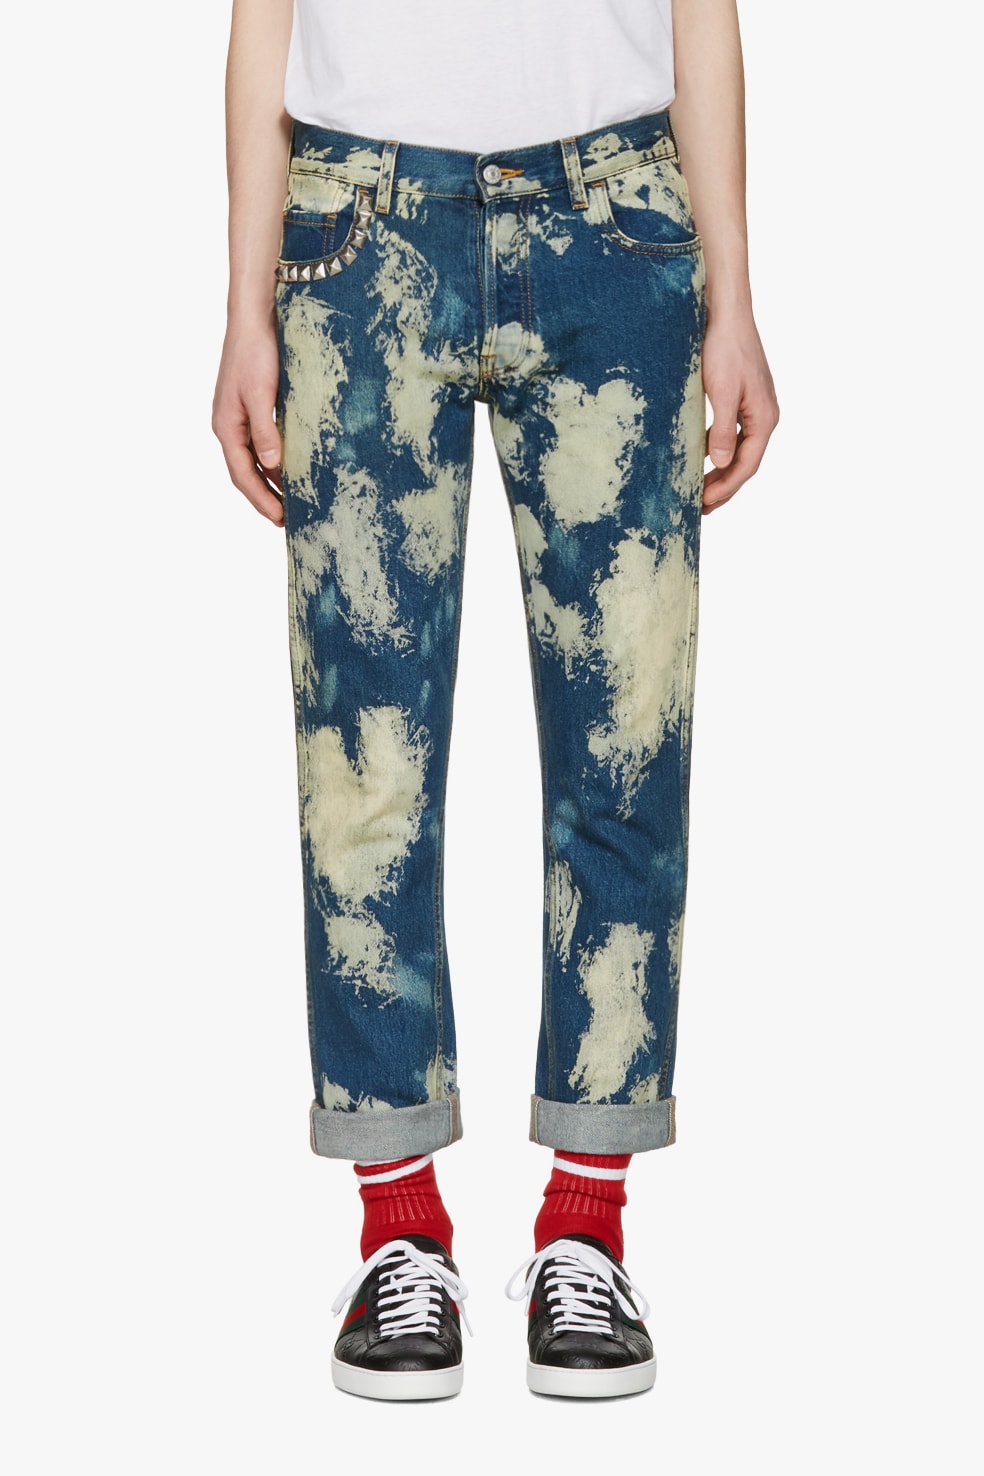 Gucci's Bleached Punk-Inspired Denim Jeans SSENSE